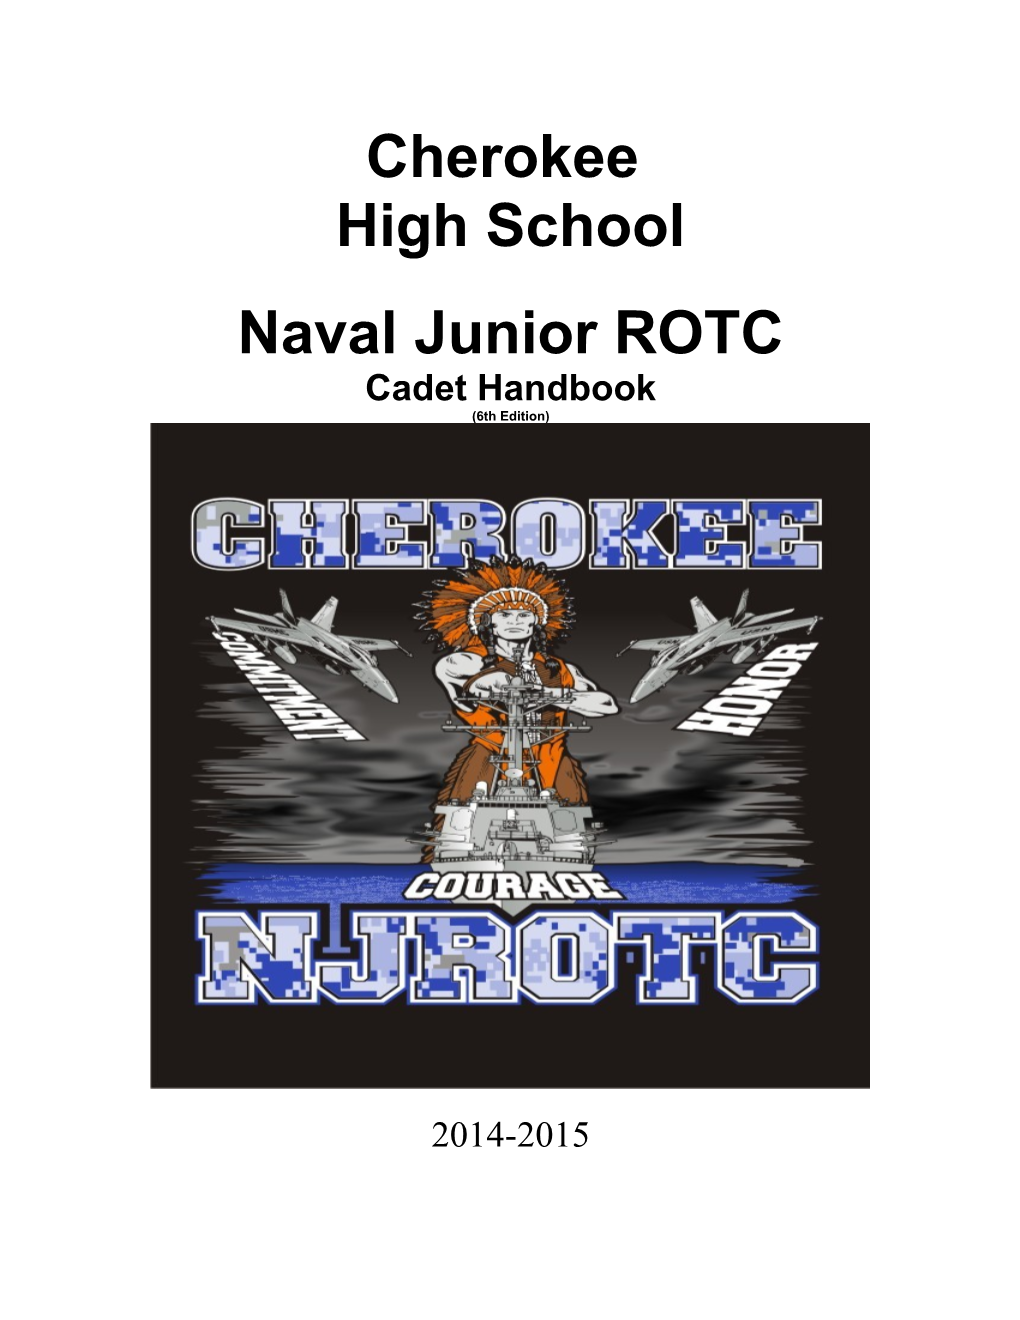 Naval Junior ROTC